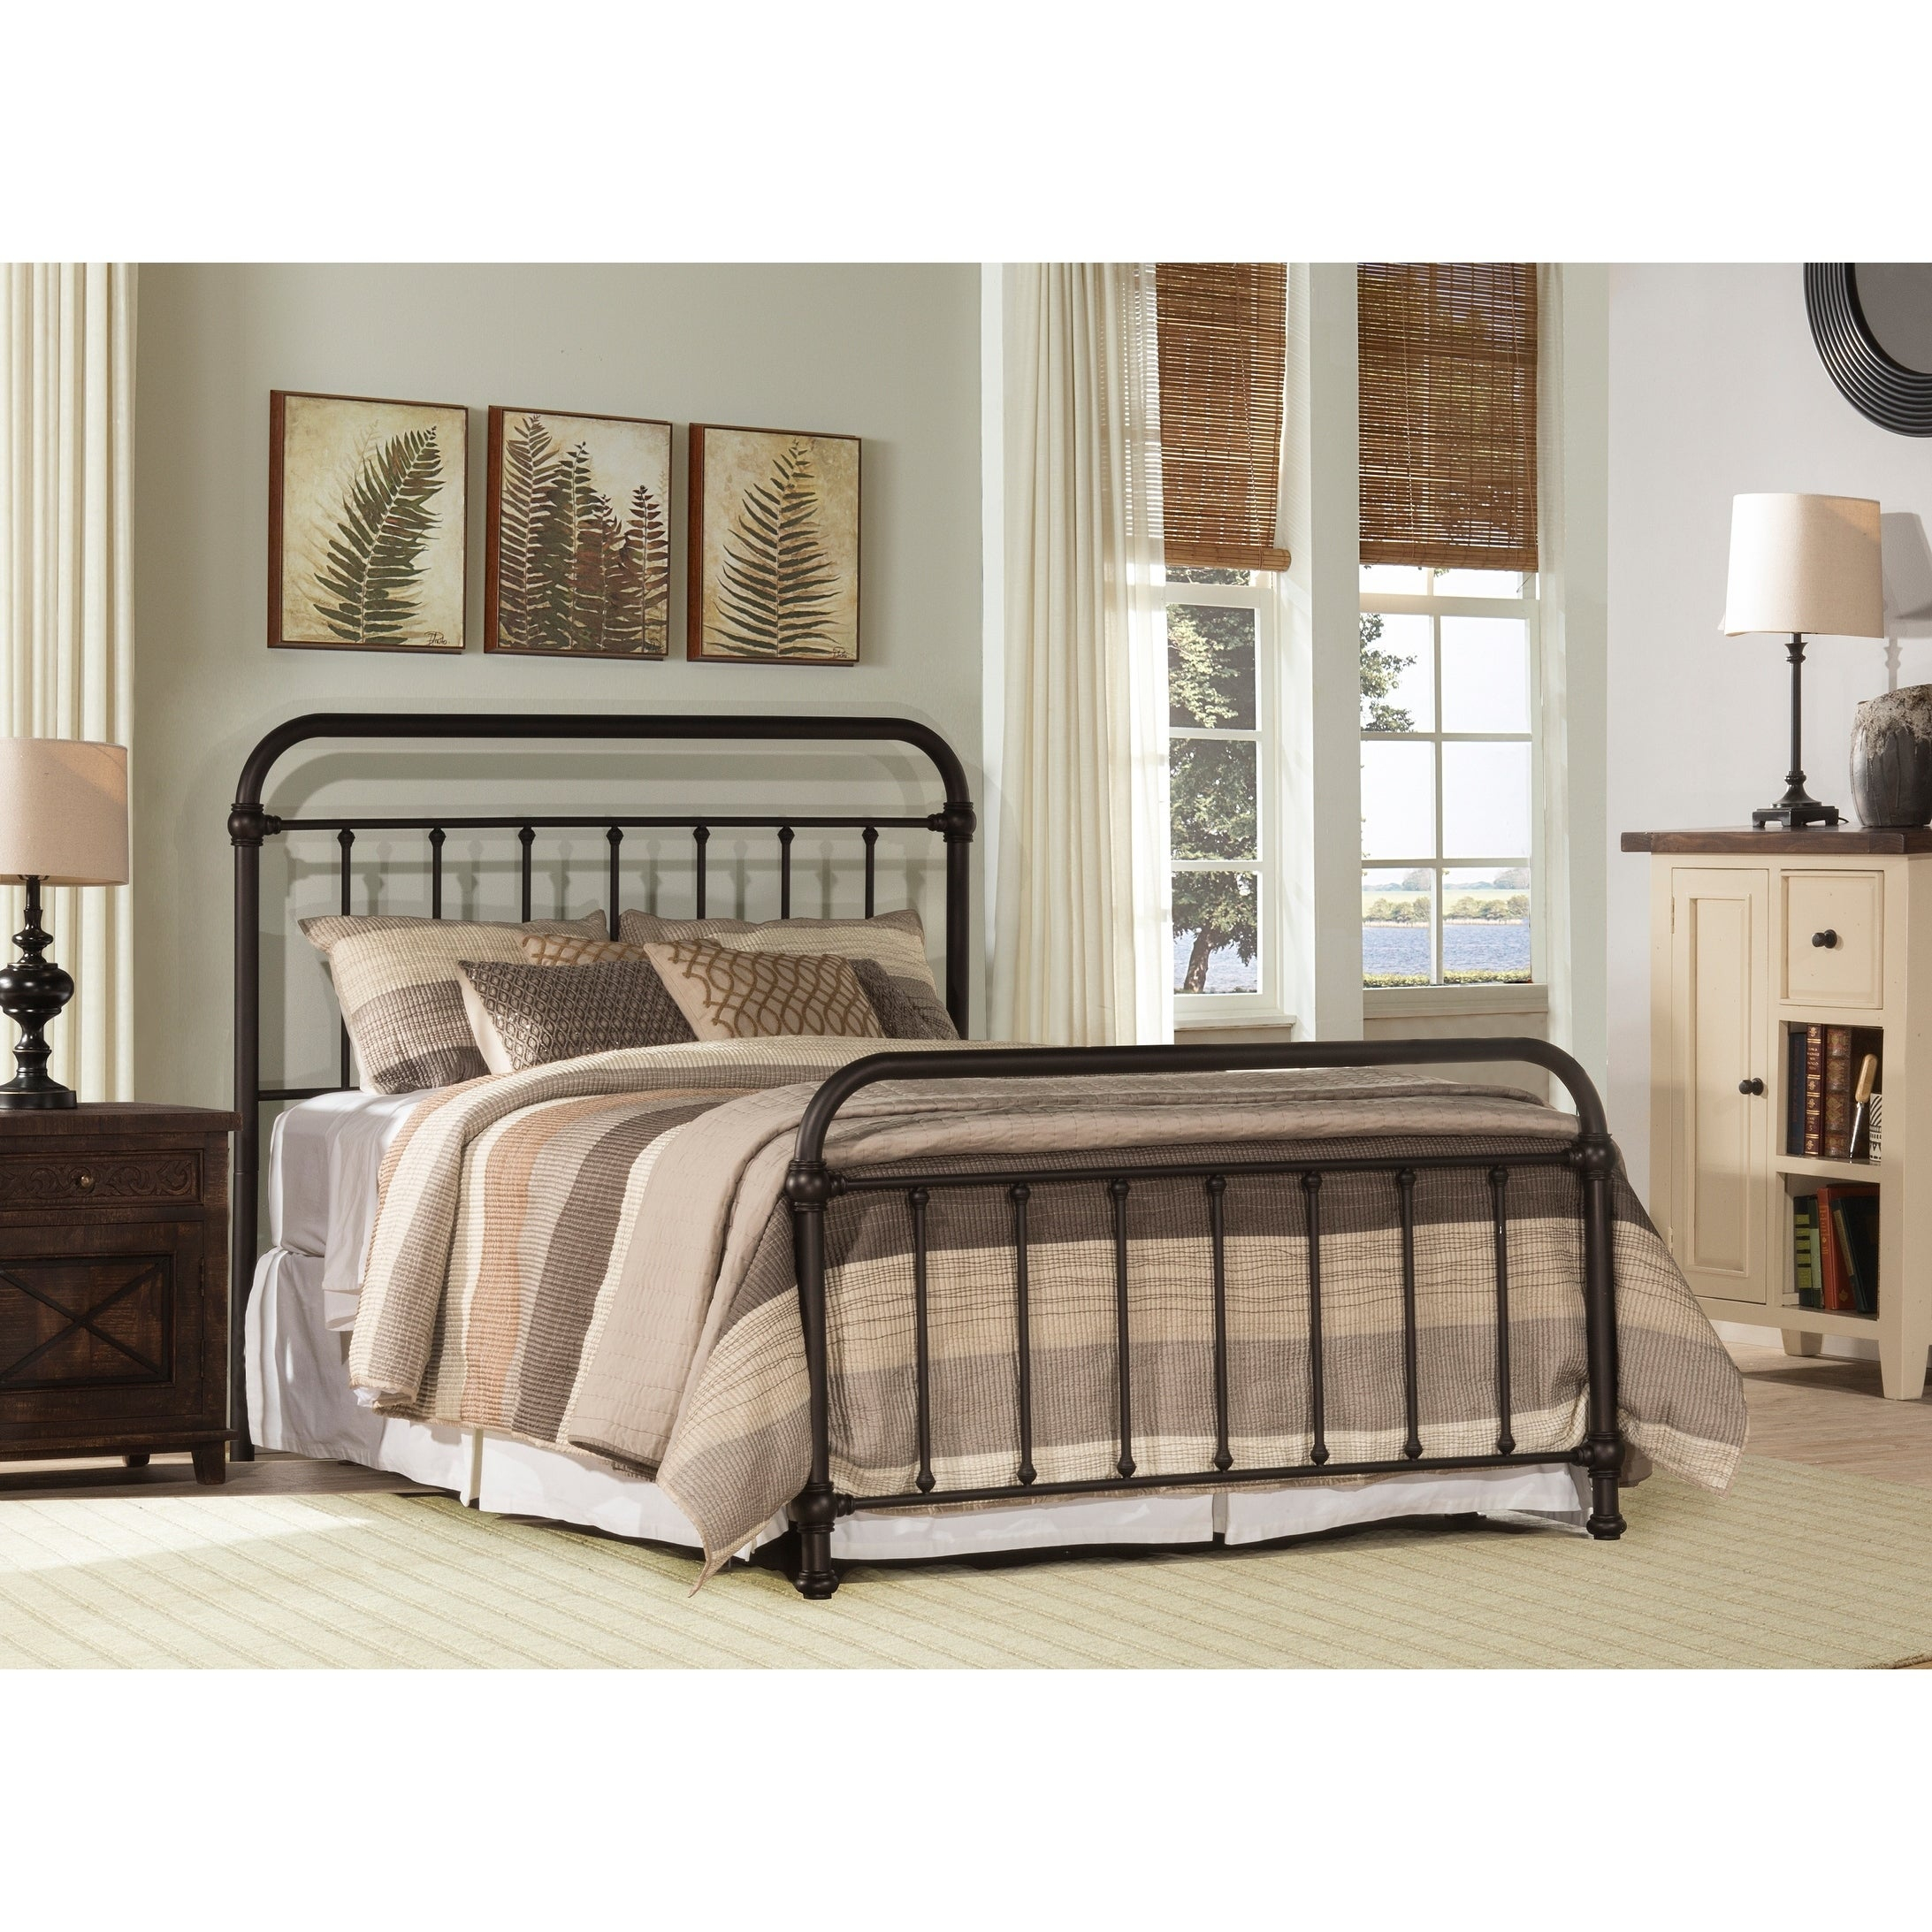 Hillsdale Kirkland Queen Bed Set Bed Frame Included intended for measurements 2185 X 2185